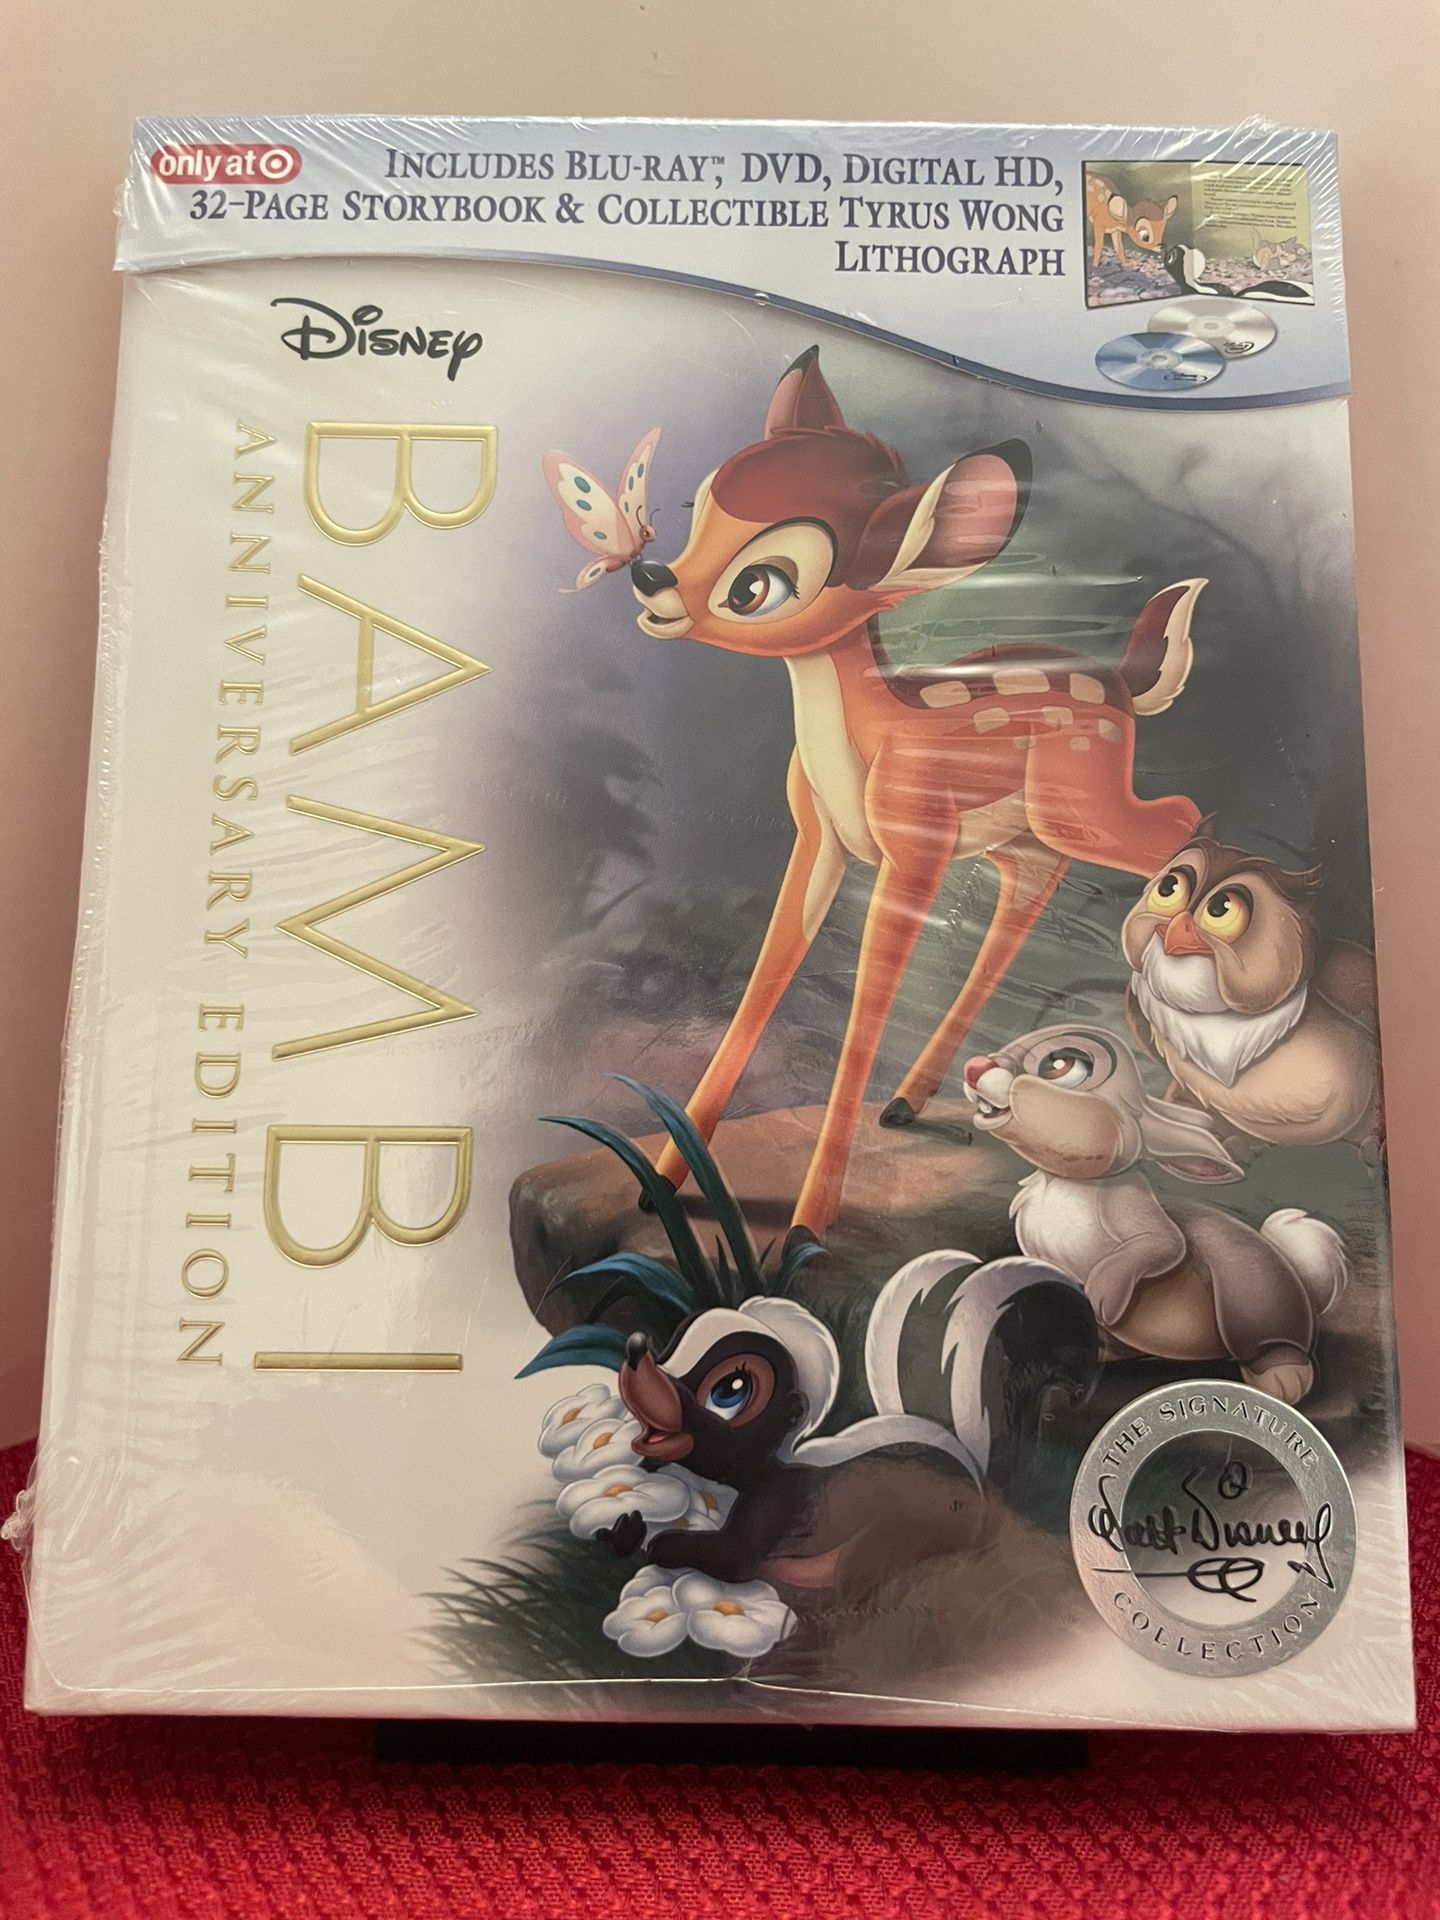 Disney’s Bambi Limited Edition Blu-Ray with Digital Copy